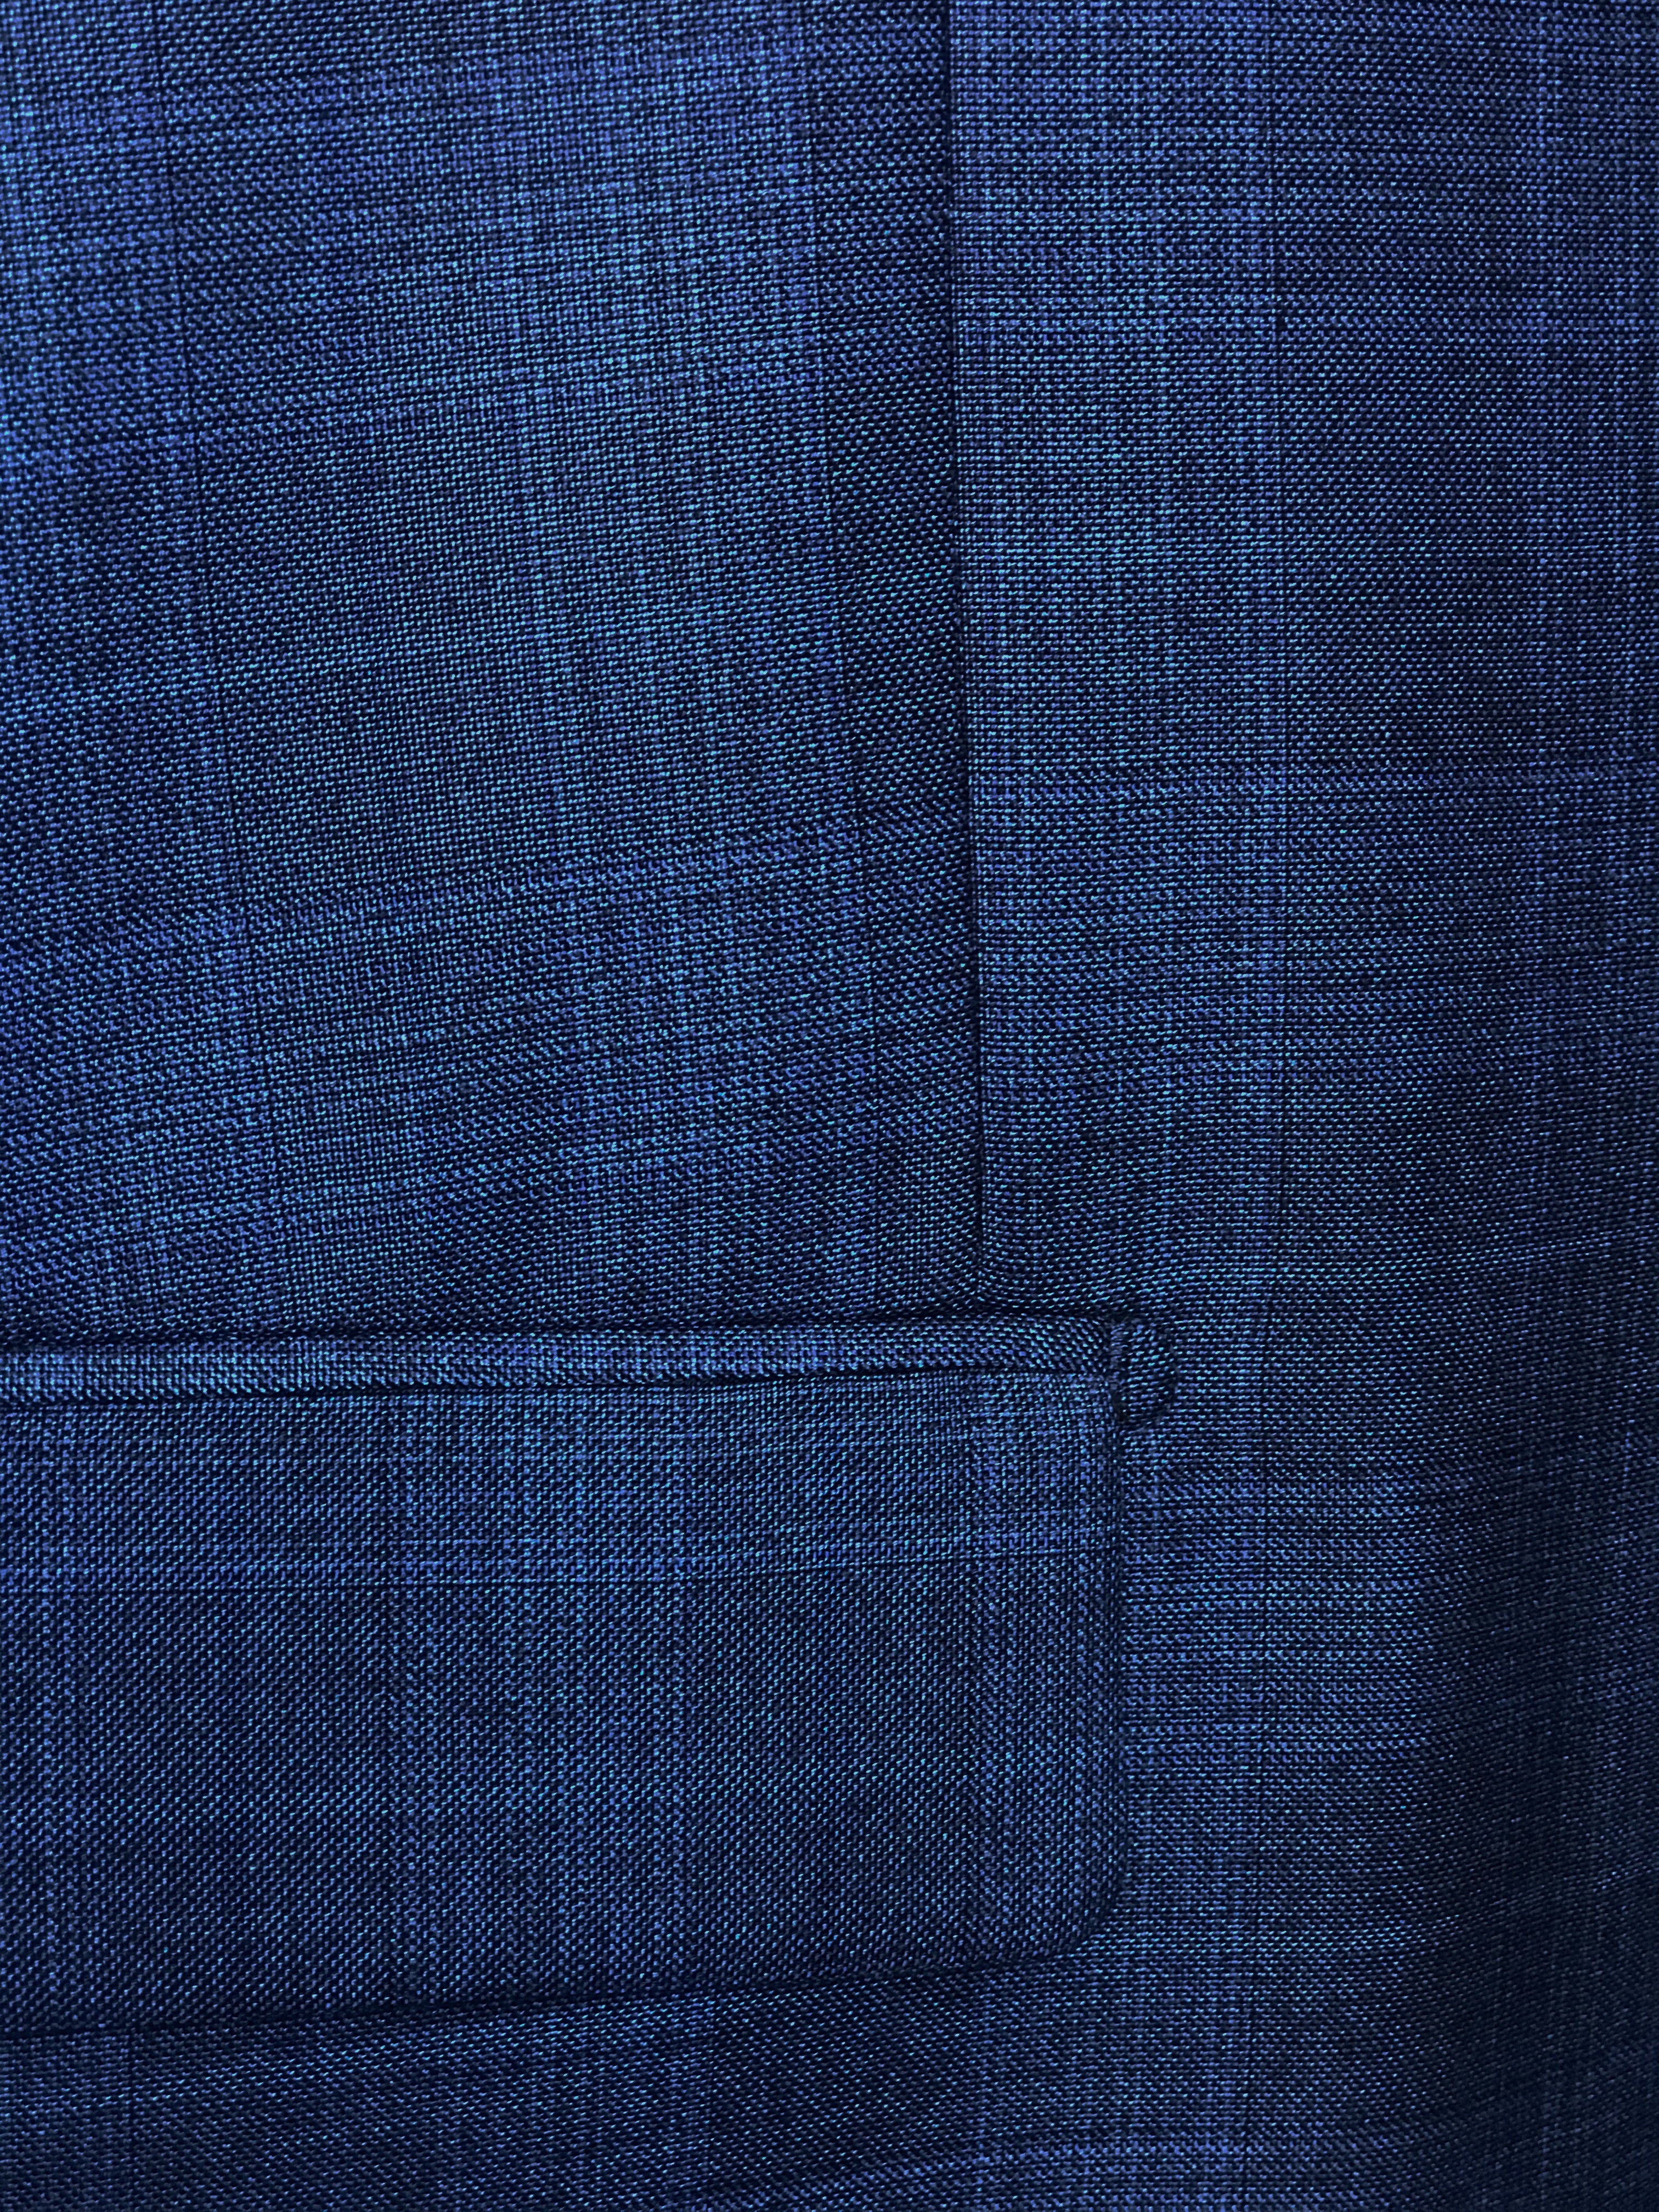 Pompey Collection - Men's Glen Plaid Dress Suit 2 Piece Regular Fit in Blue